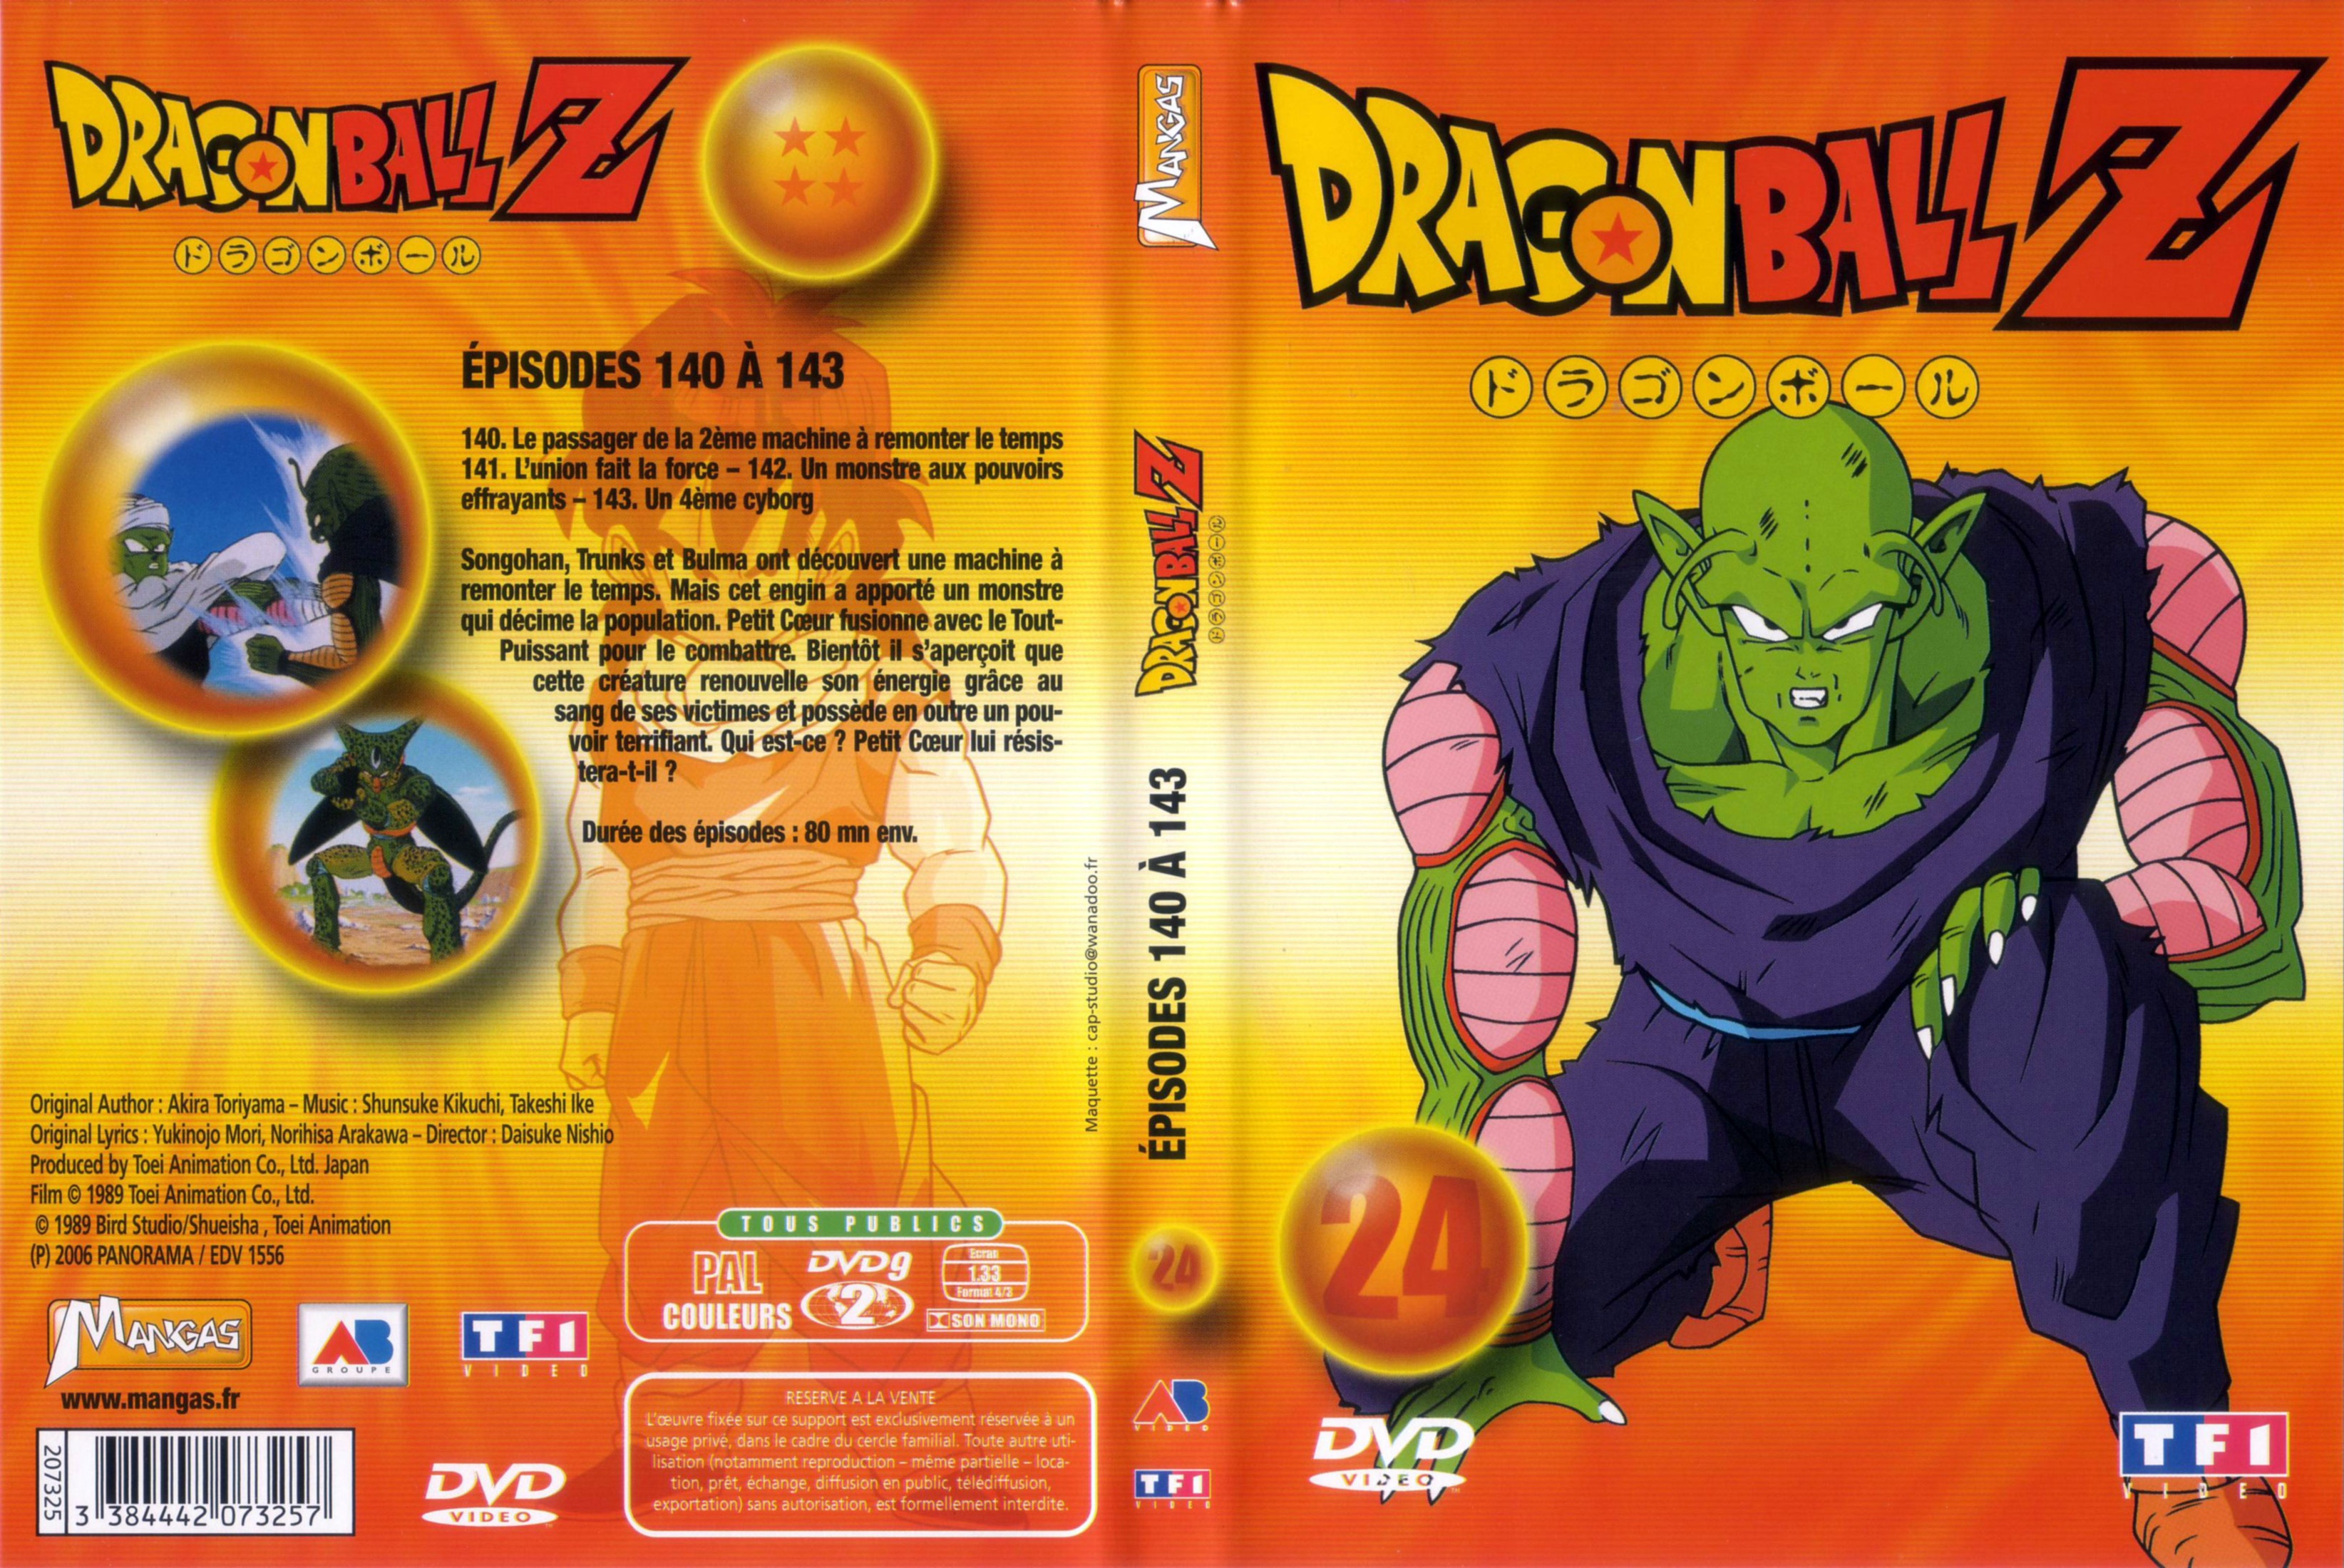 Jaquette DVD Dragon ball Z vol 24